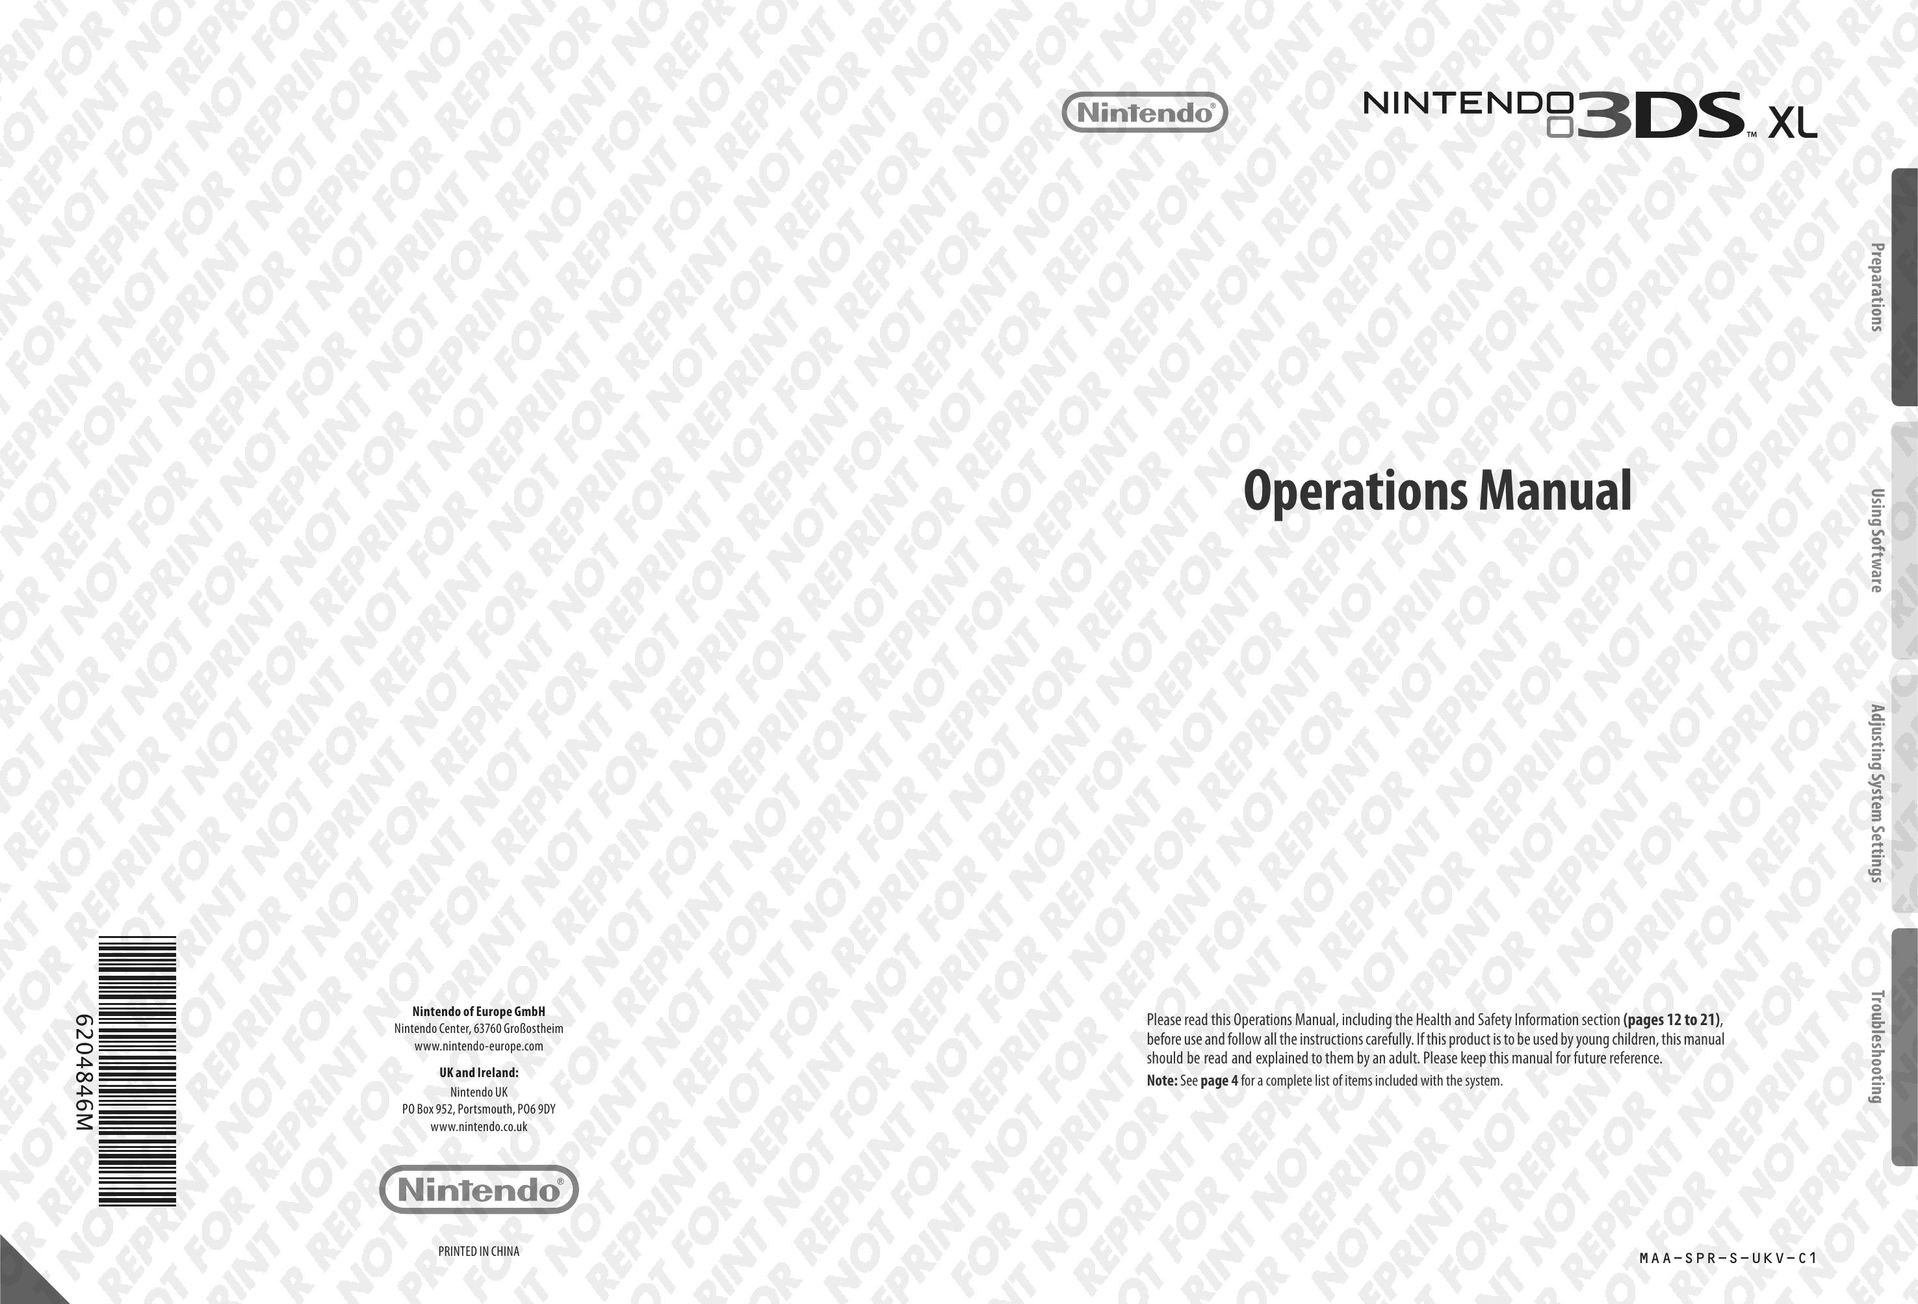 Nintendo SPR-004 Handheld Game System User Manual